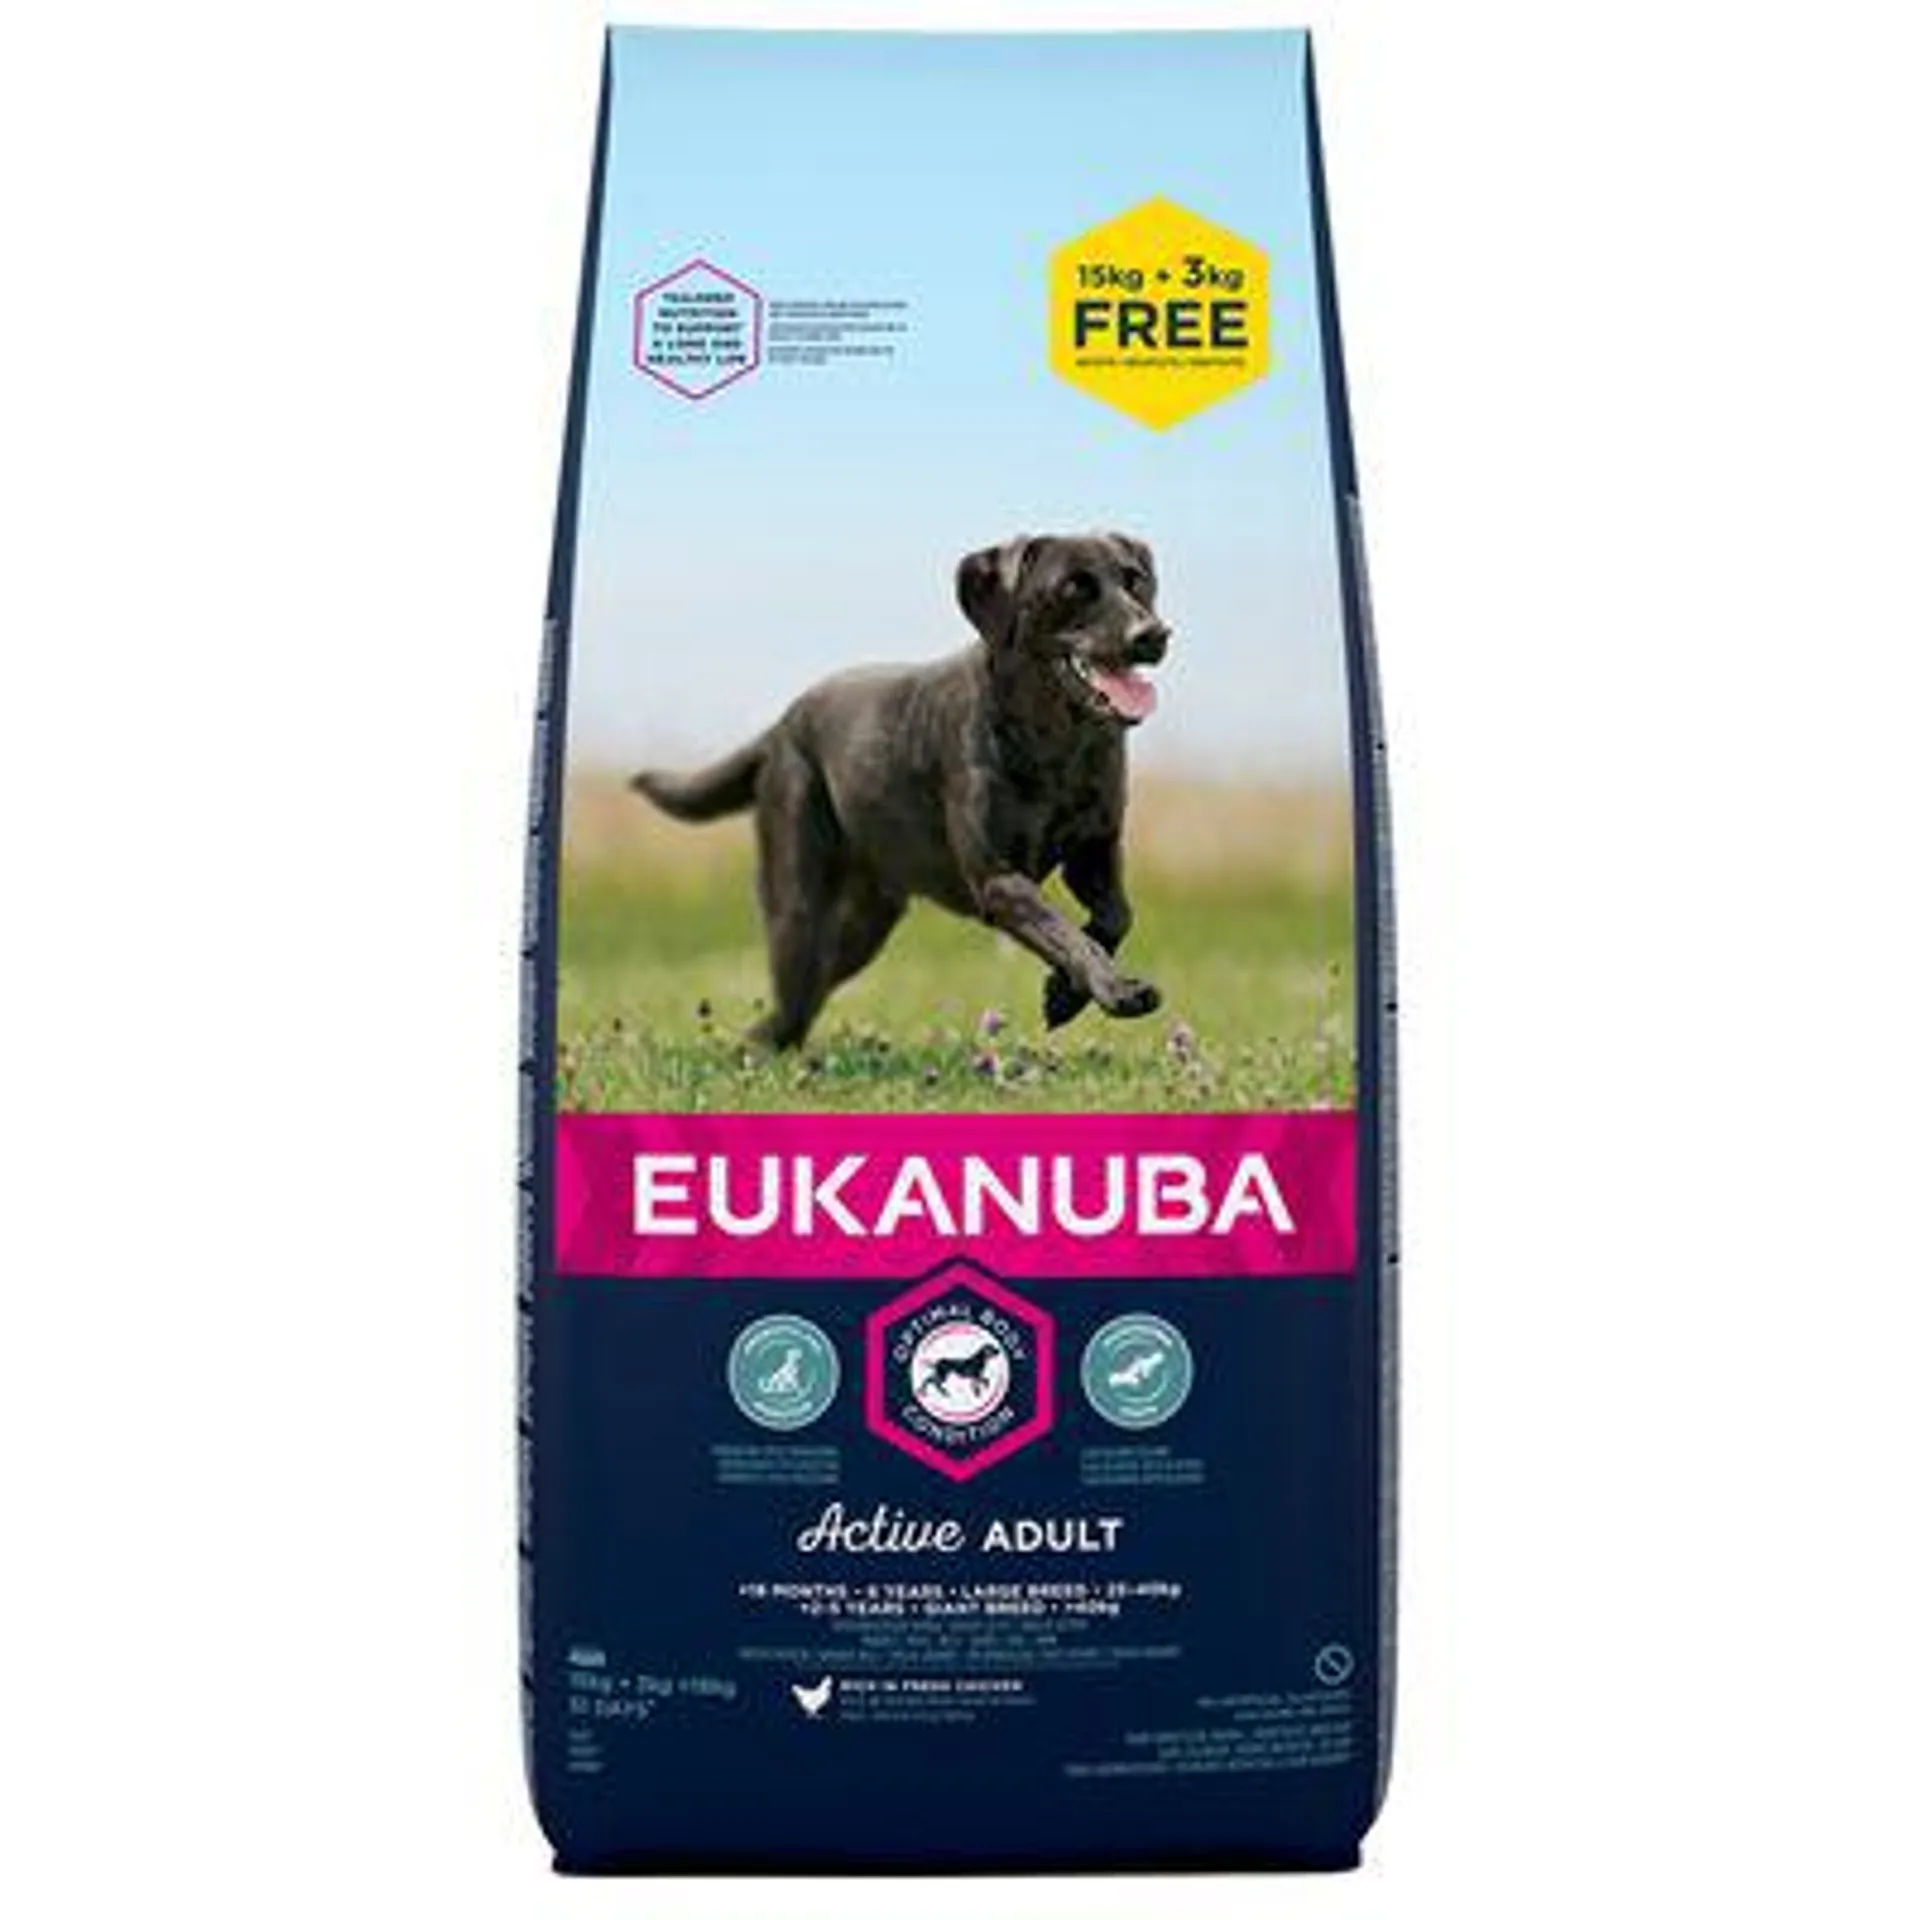 18kg Eukanuba Dry Dog Food- 15kg + 3kg Free!*